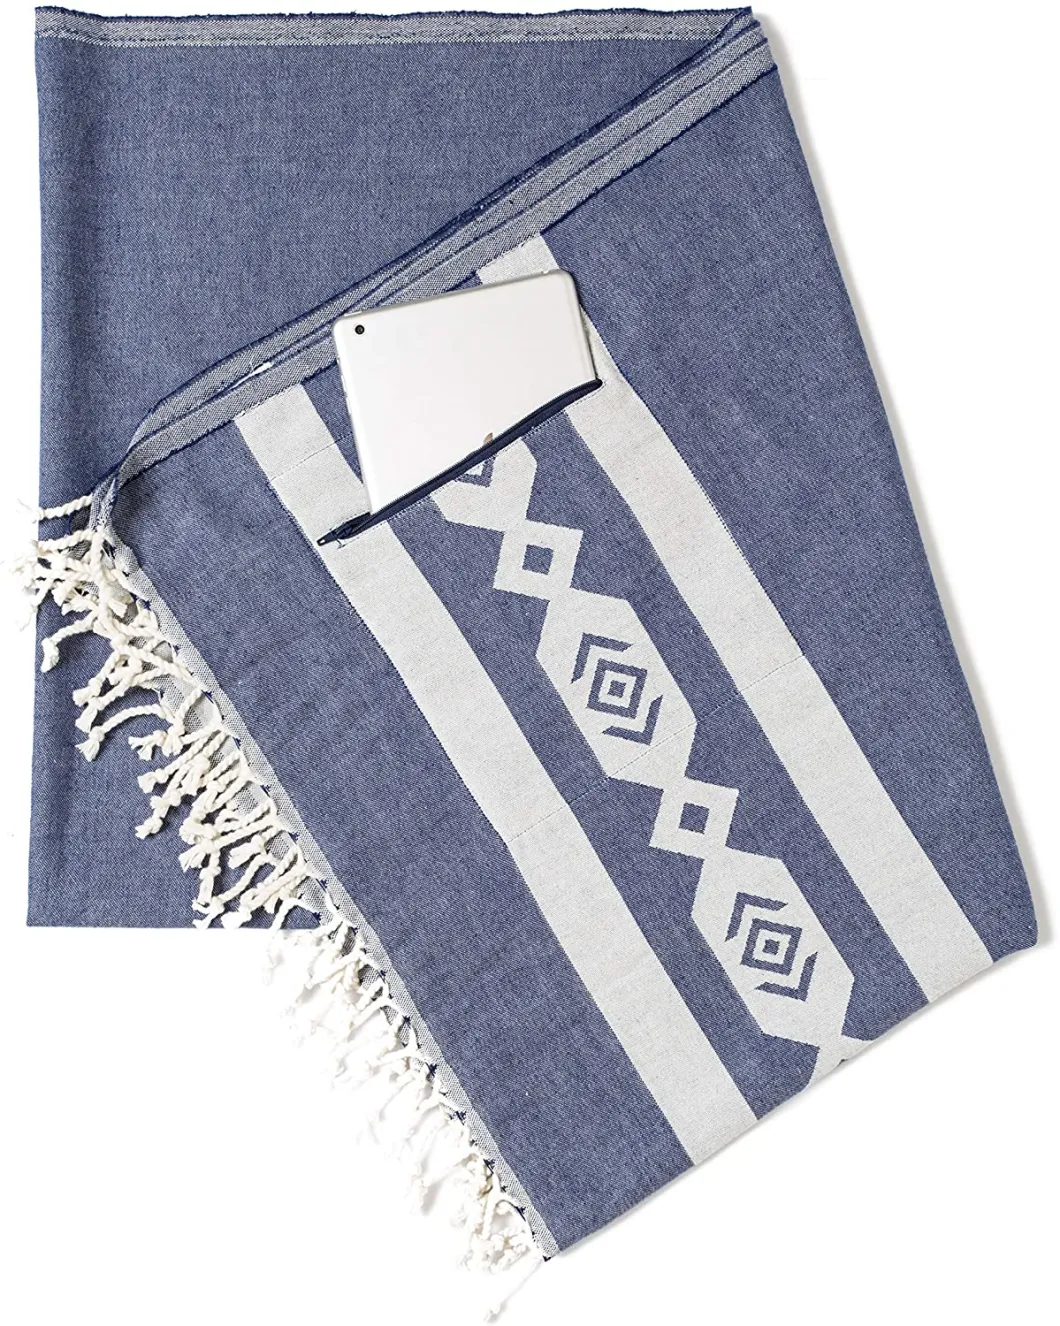 100% Organic Cotton Acapulco Turkish Towel with Hidden Zipper Pocket - 37X70 Inches, Navy